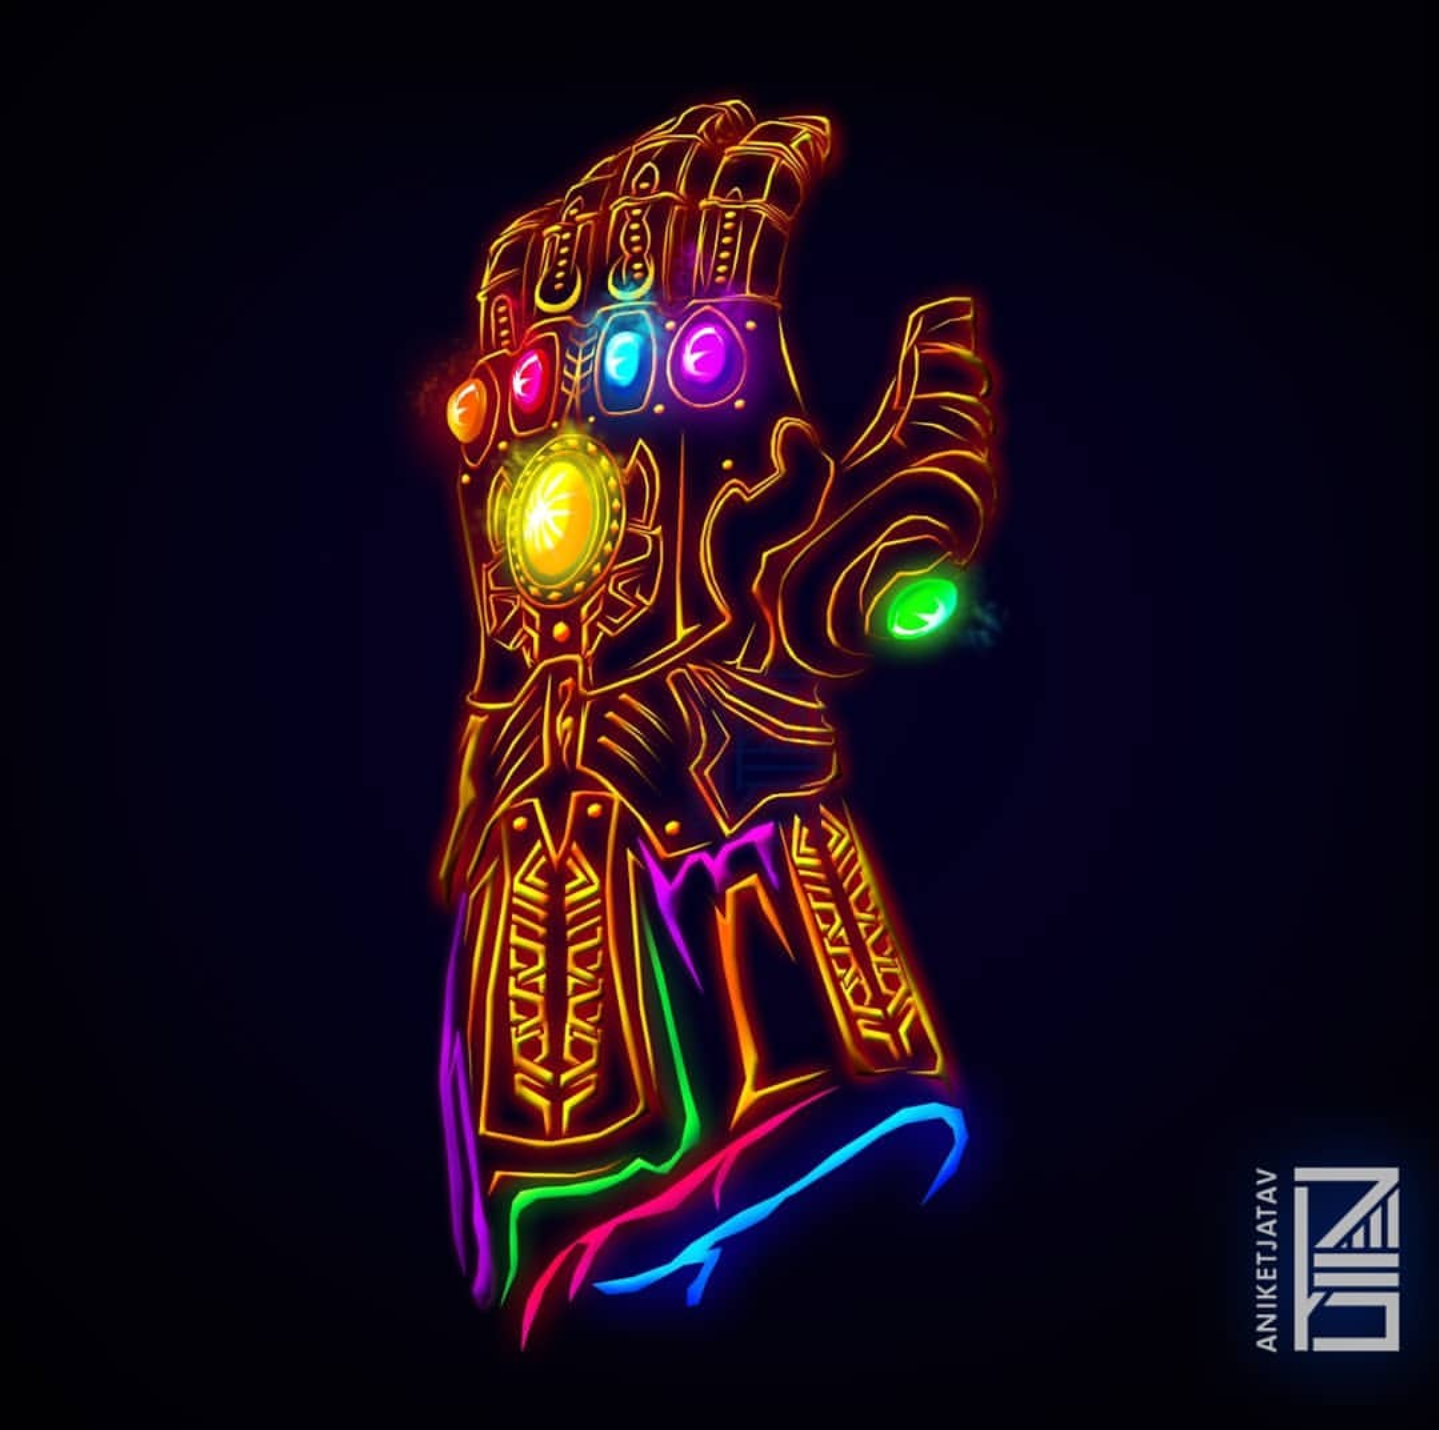 Amazing Neon Avengers Infinity War Artwork!!!